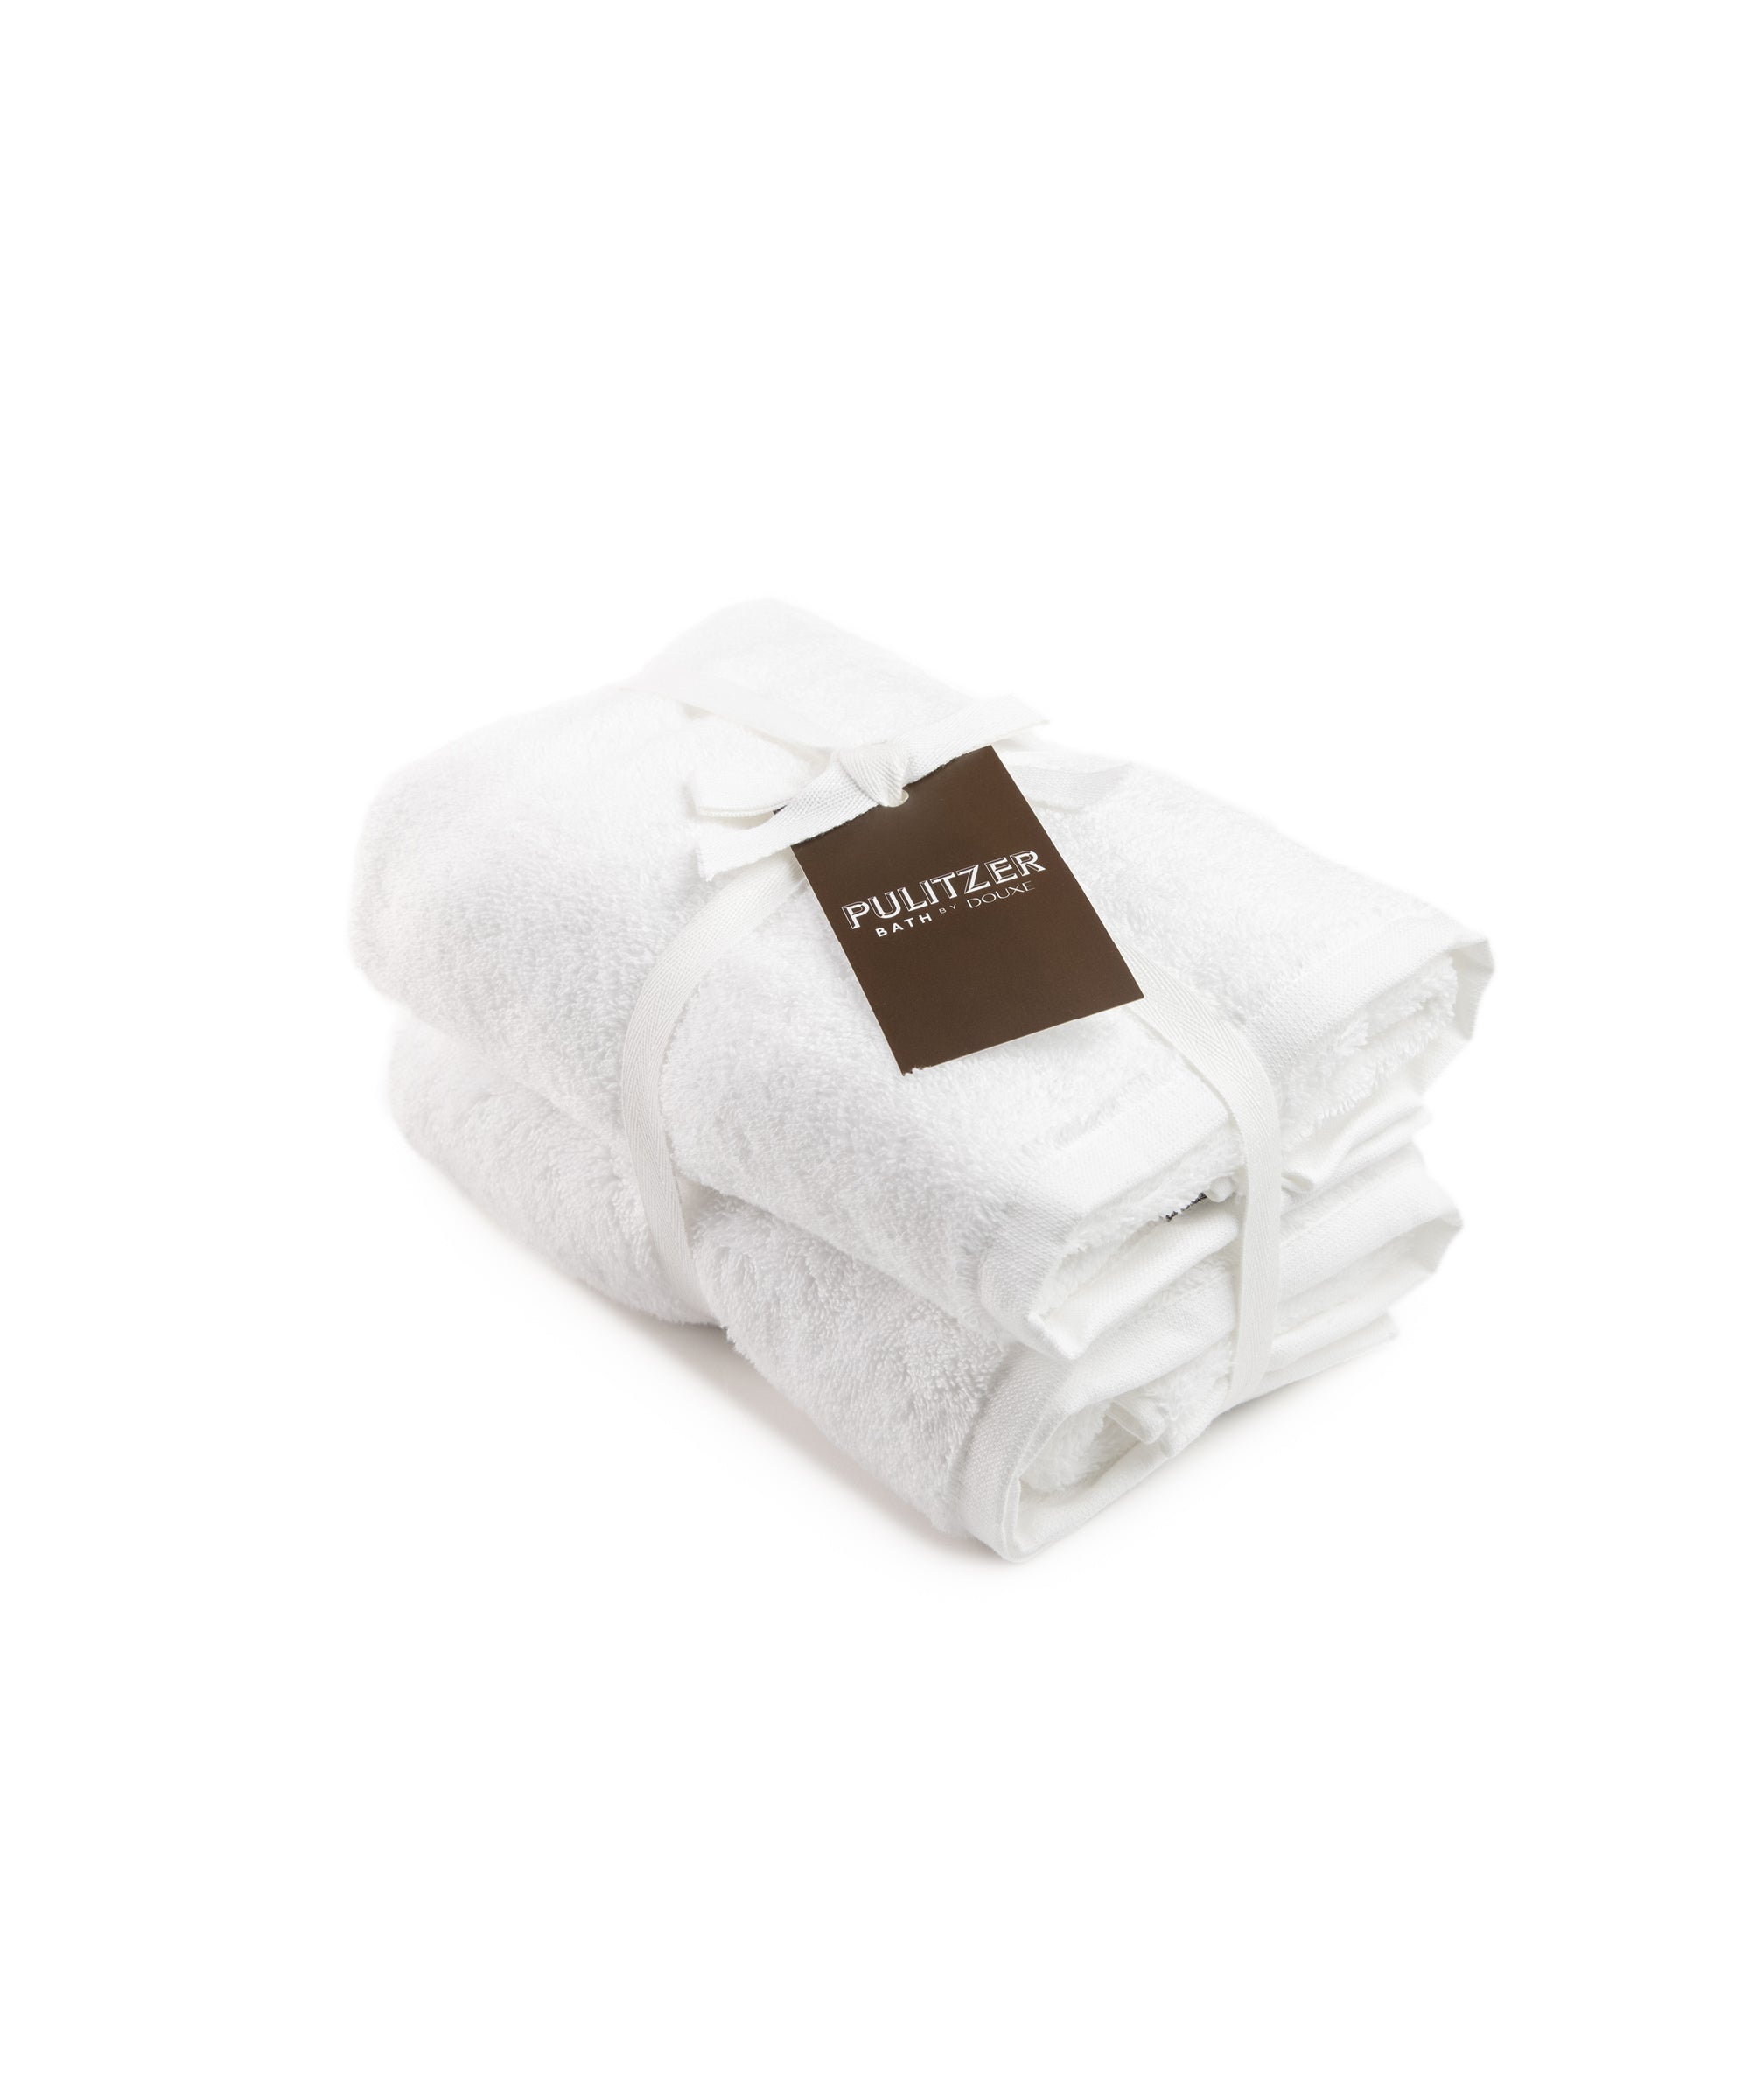 DOUXE Hotel Towel - 50x100 cm - Zero Twist (2 pcs) - Pebble Beach